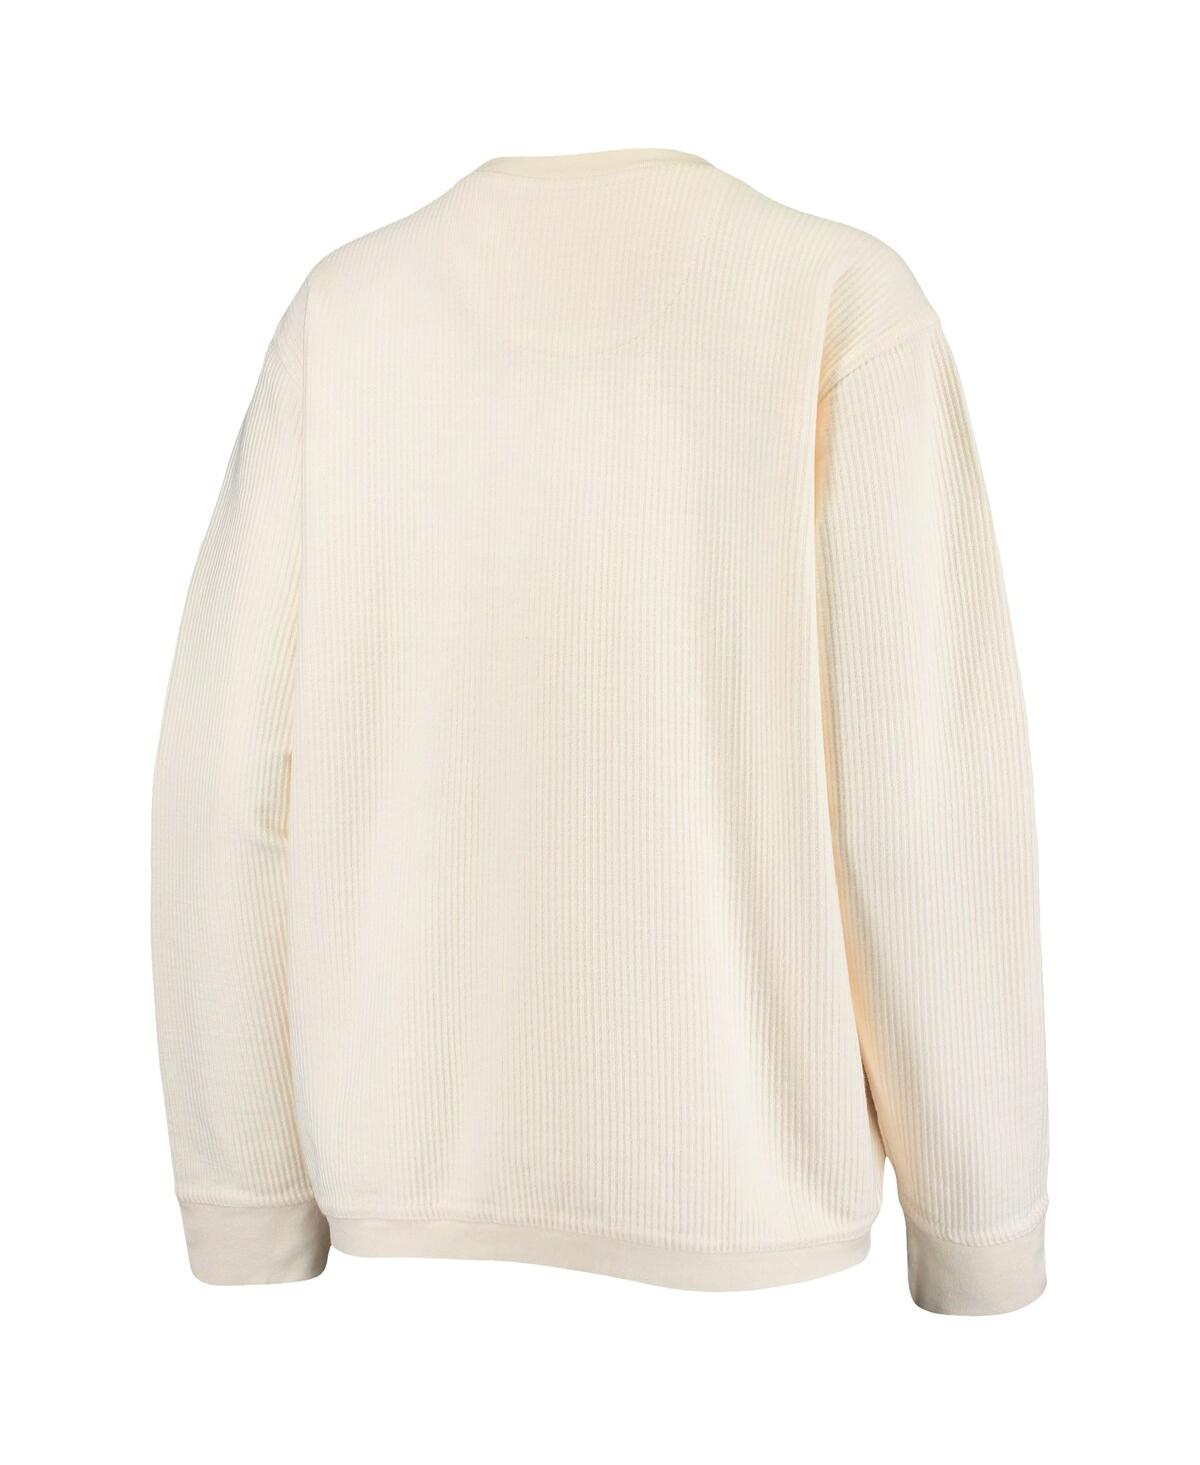 Shop Pressbox Women's  White Georgia Bulldogs Comfy Cord Vintage-like Wash Basic Arch Pullover Sweatshirt